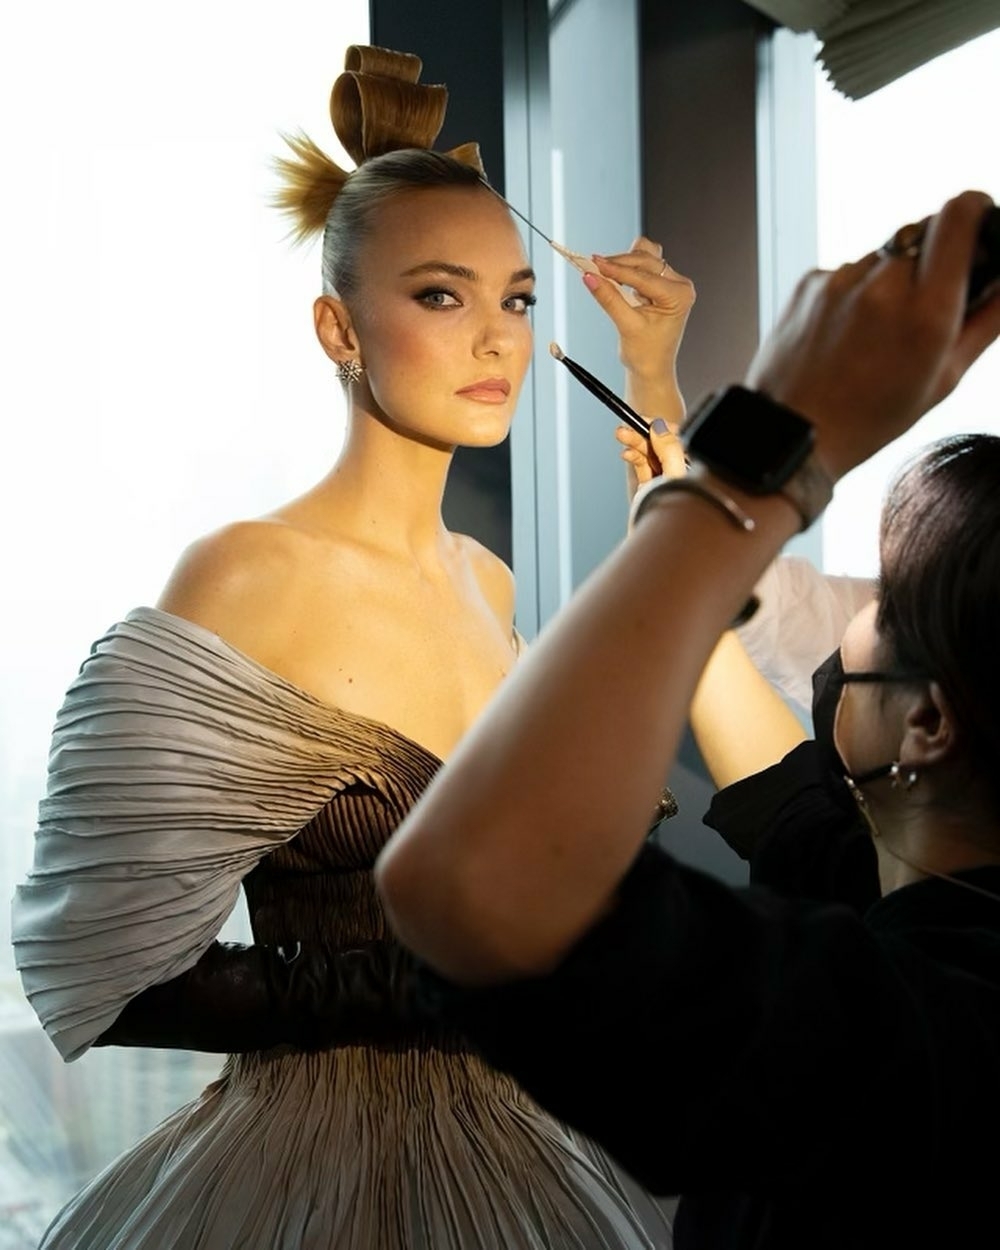 Emma Stone Wears One of Her Wedding Dresses to 2022 Met Gala